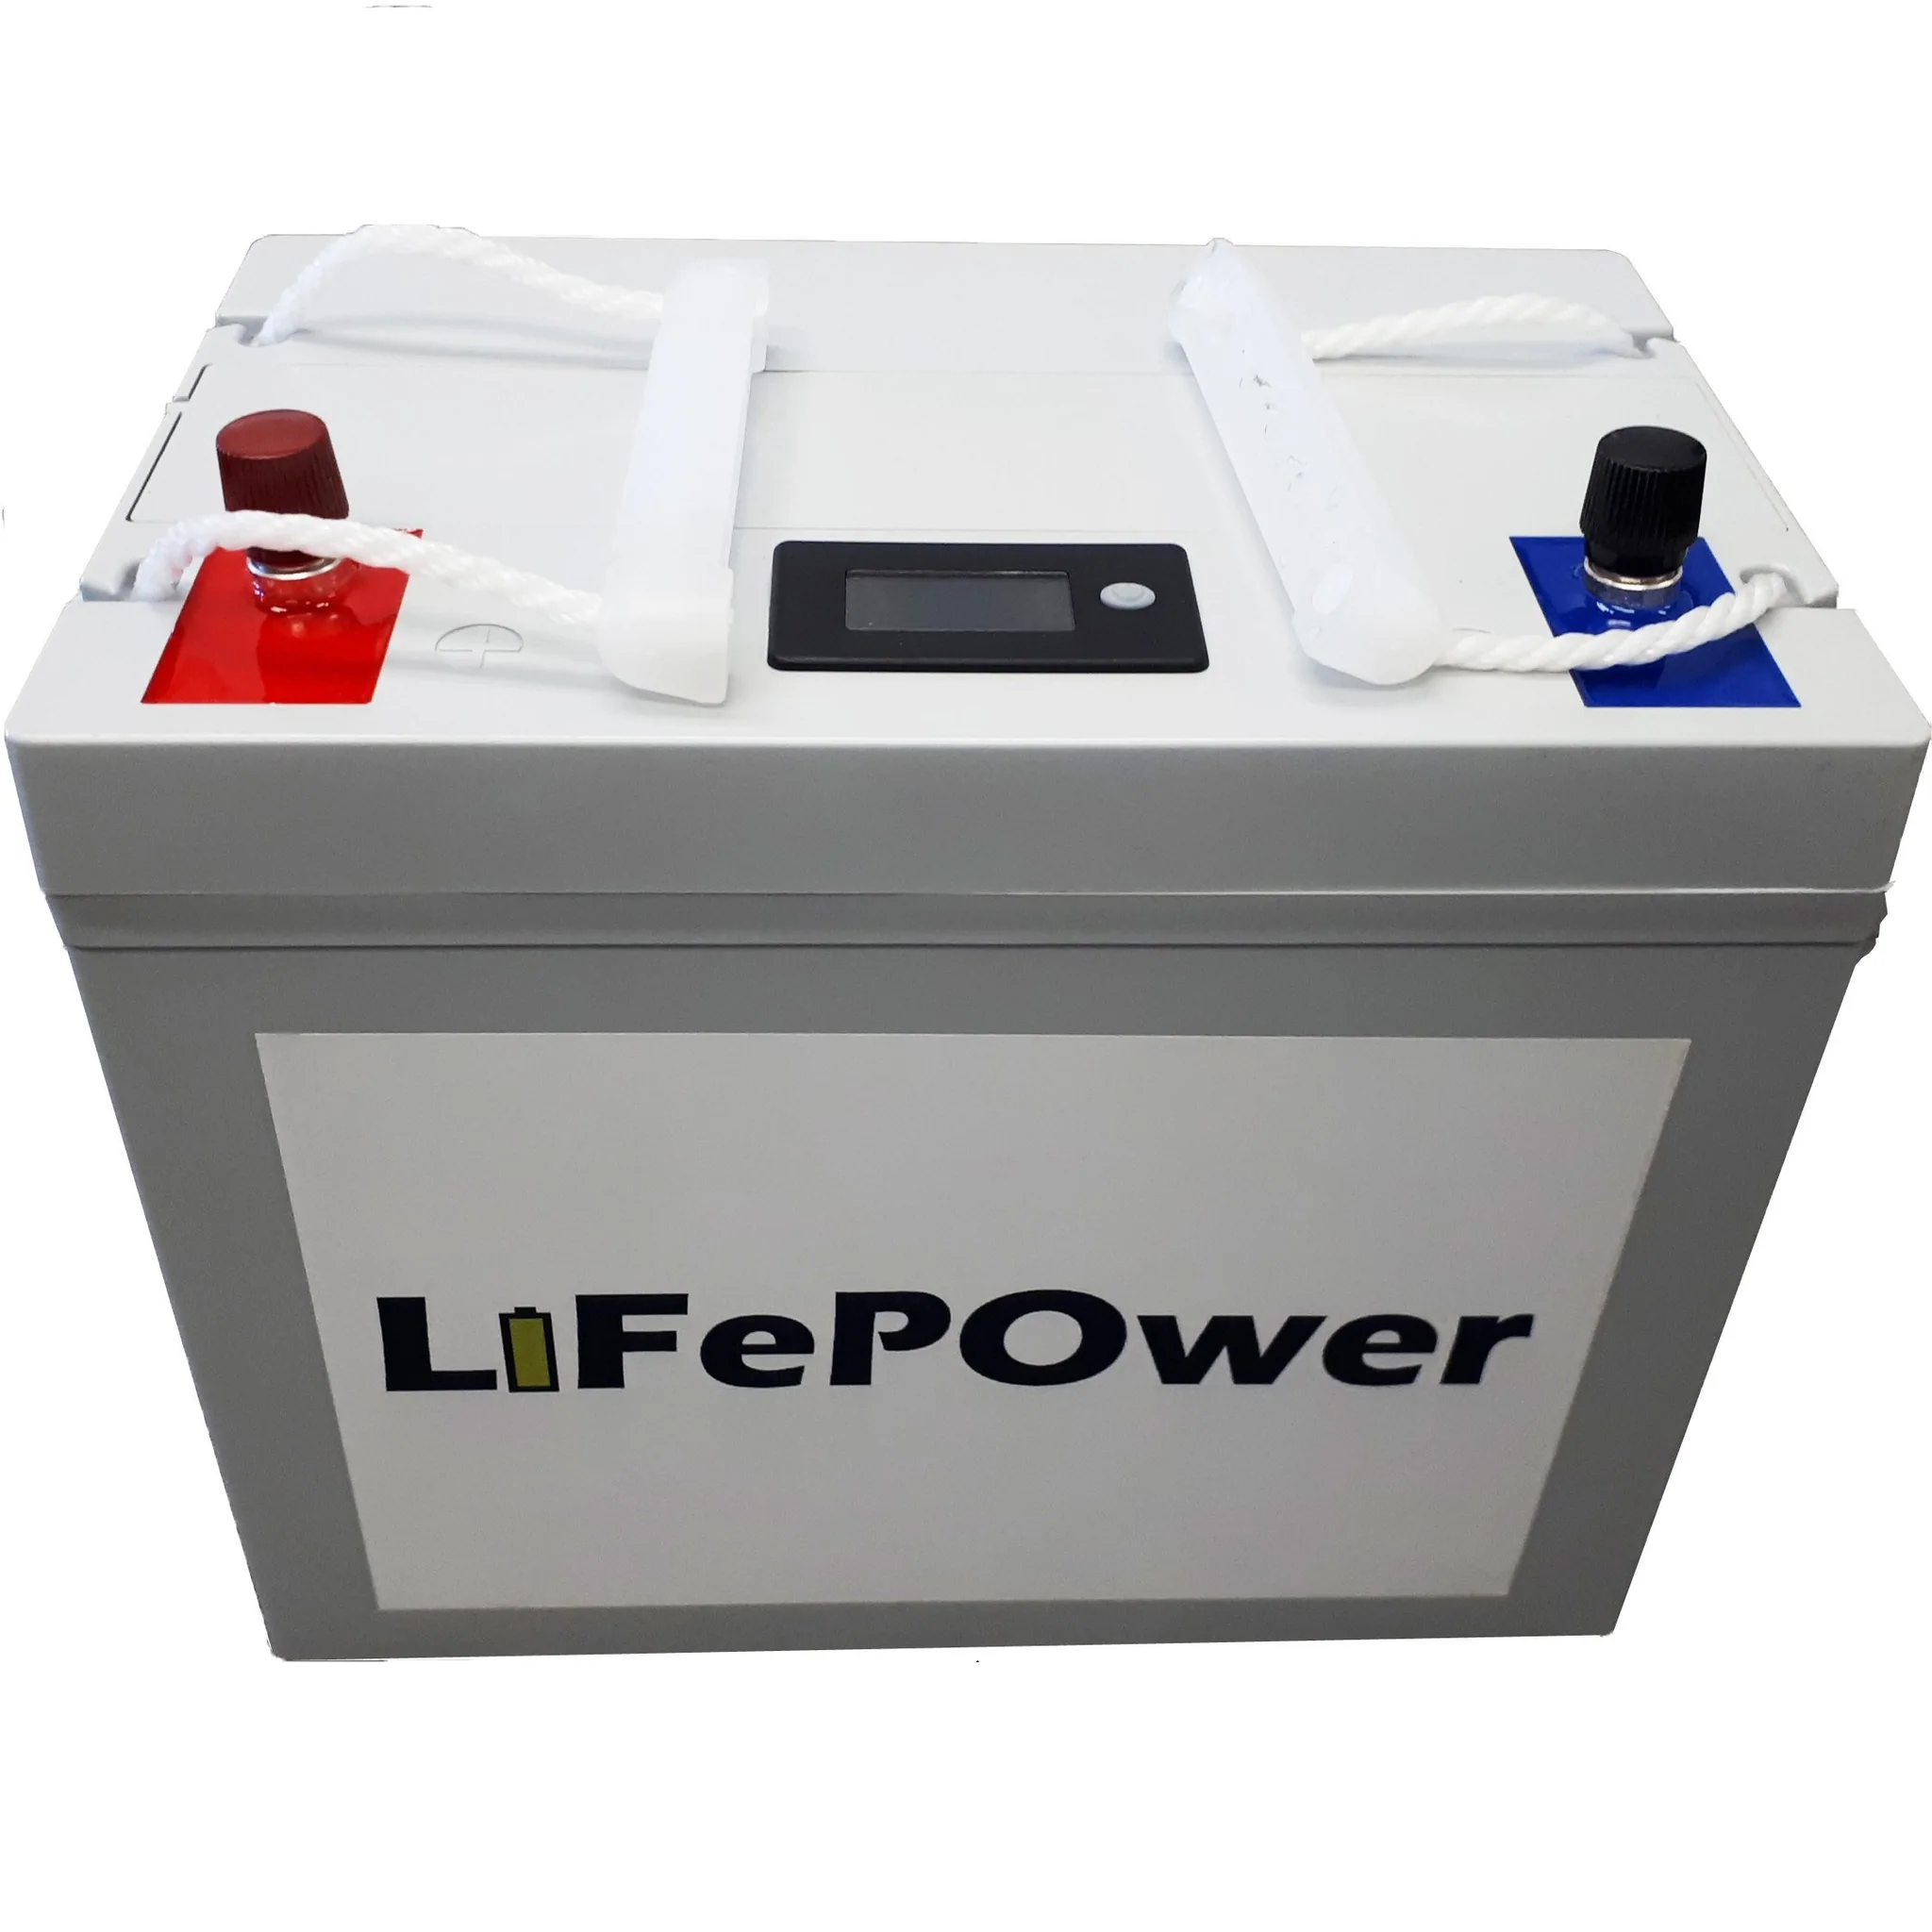 Lifepower, Solar battery, lithium battery